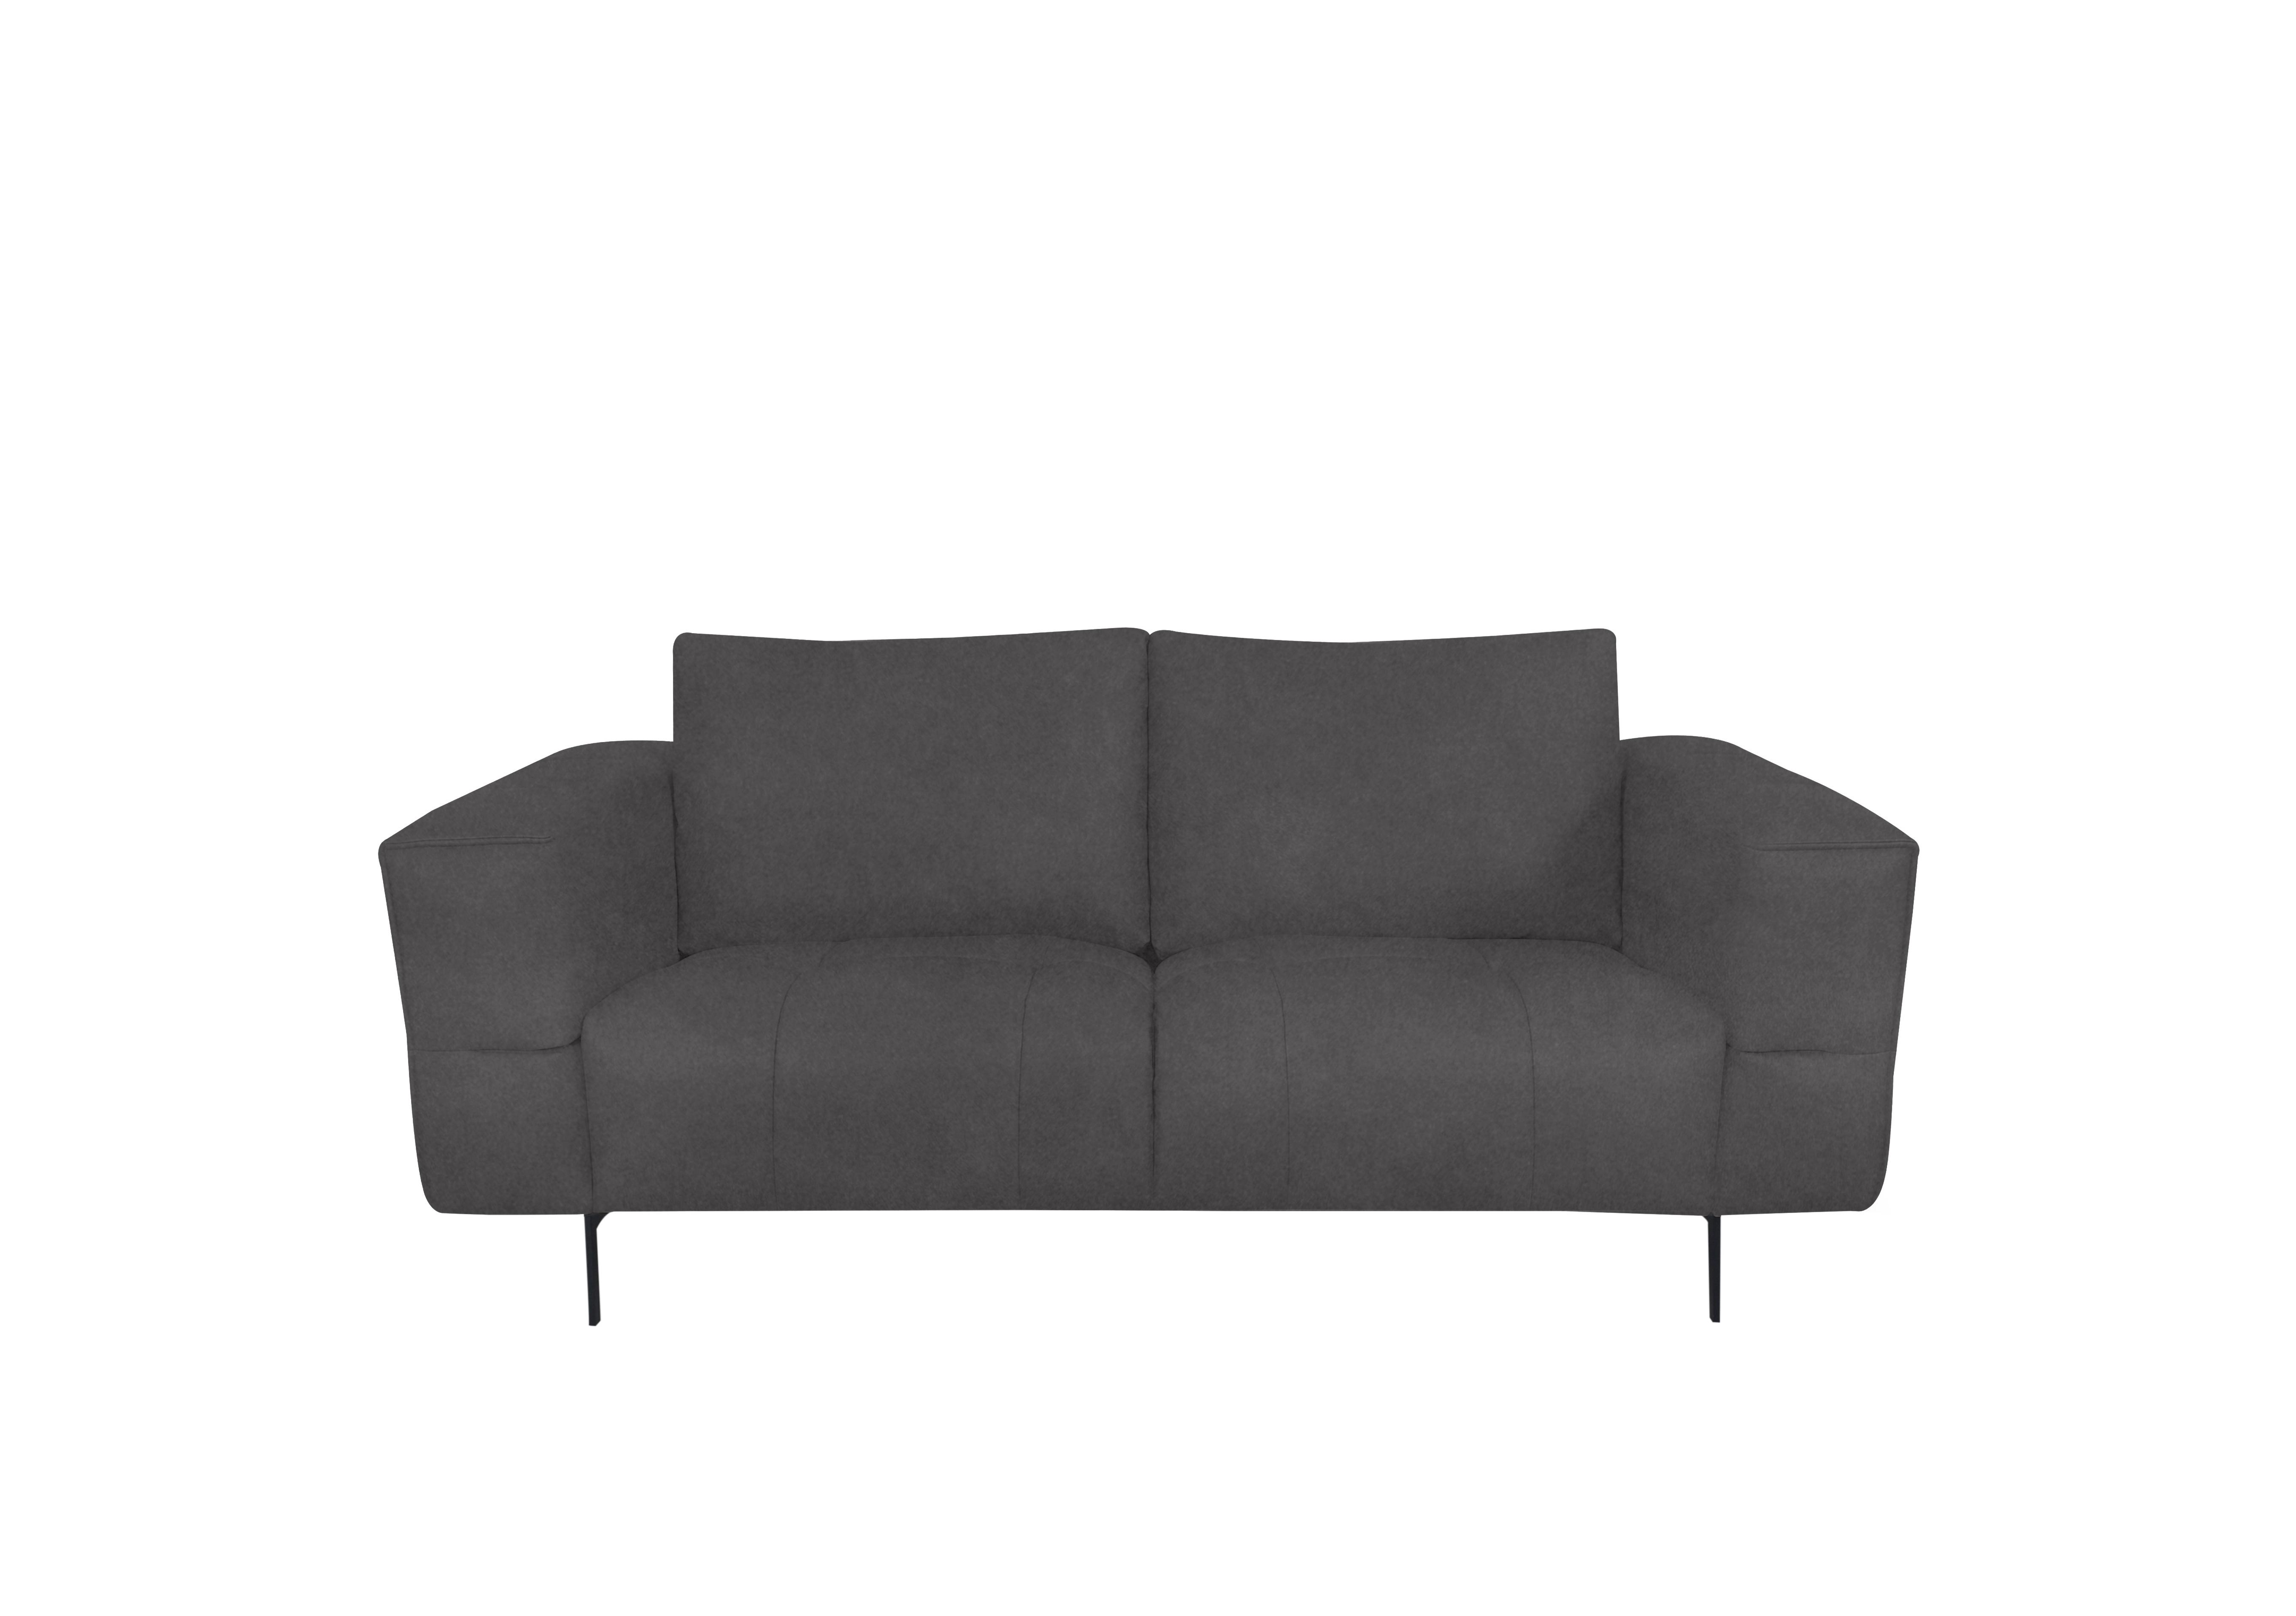 Lawson 2 Seater Fabric Sofa in Fab-Meg-R20 Pewter on Furniture Village